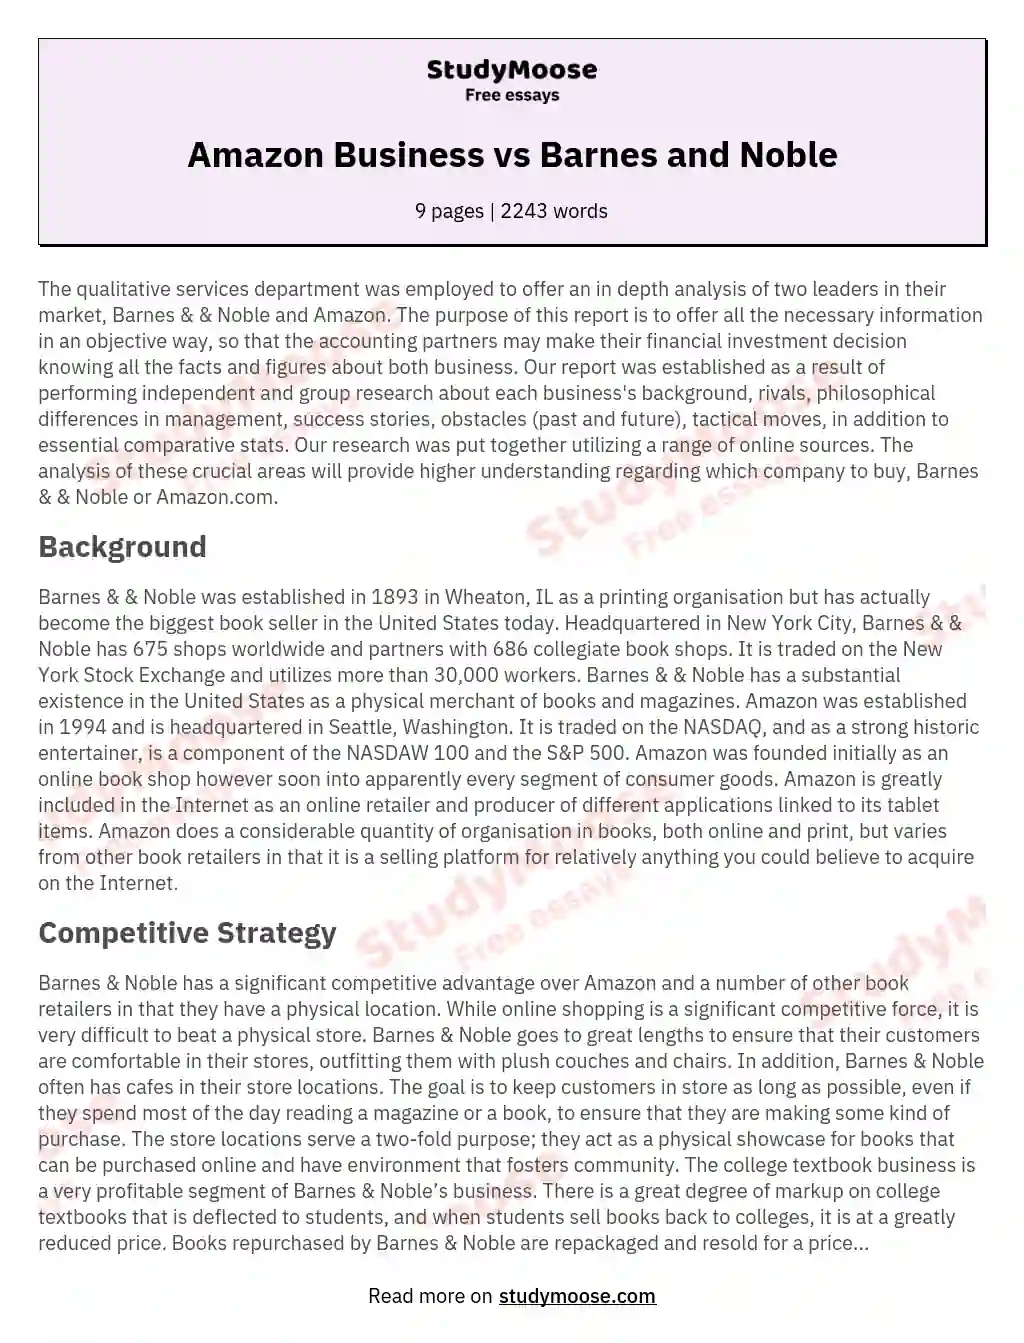 Amazon Business vs Barnes and Noble essay